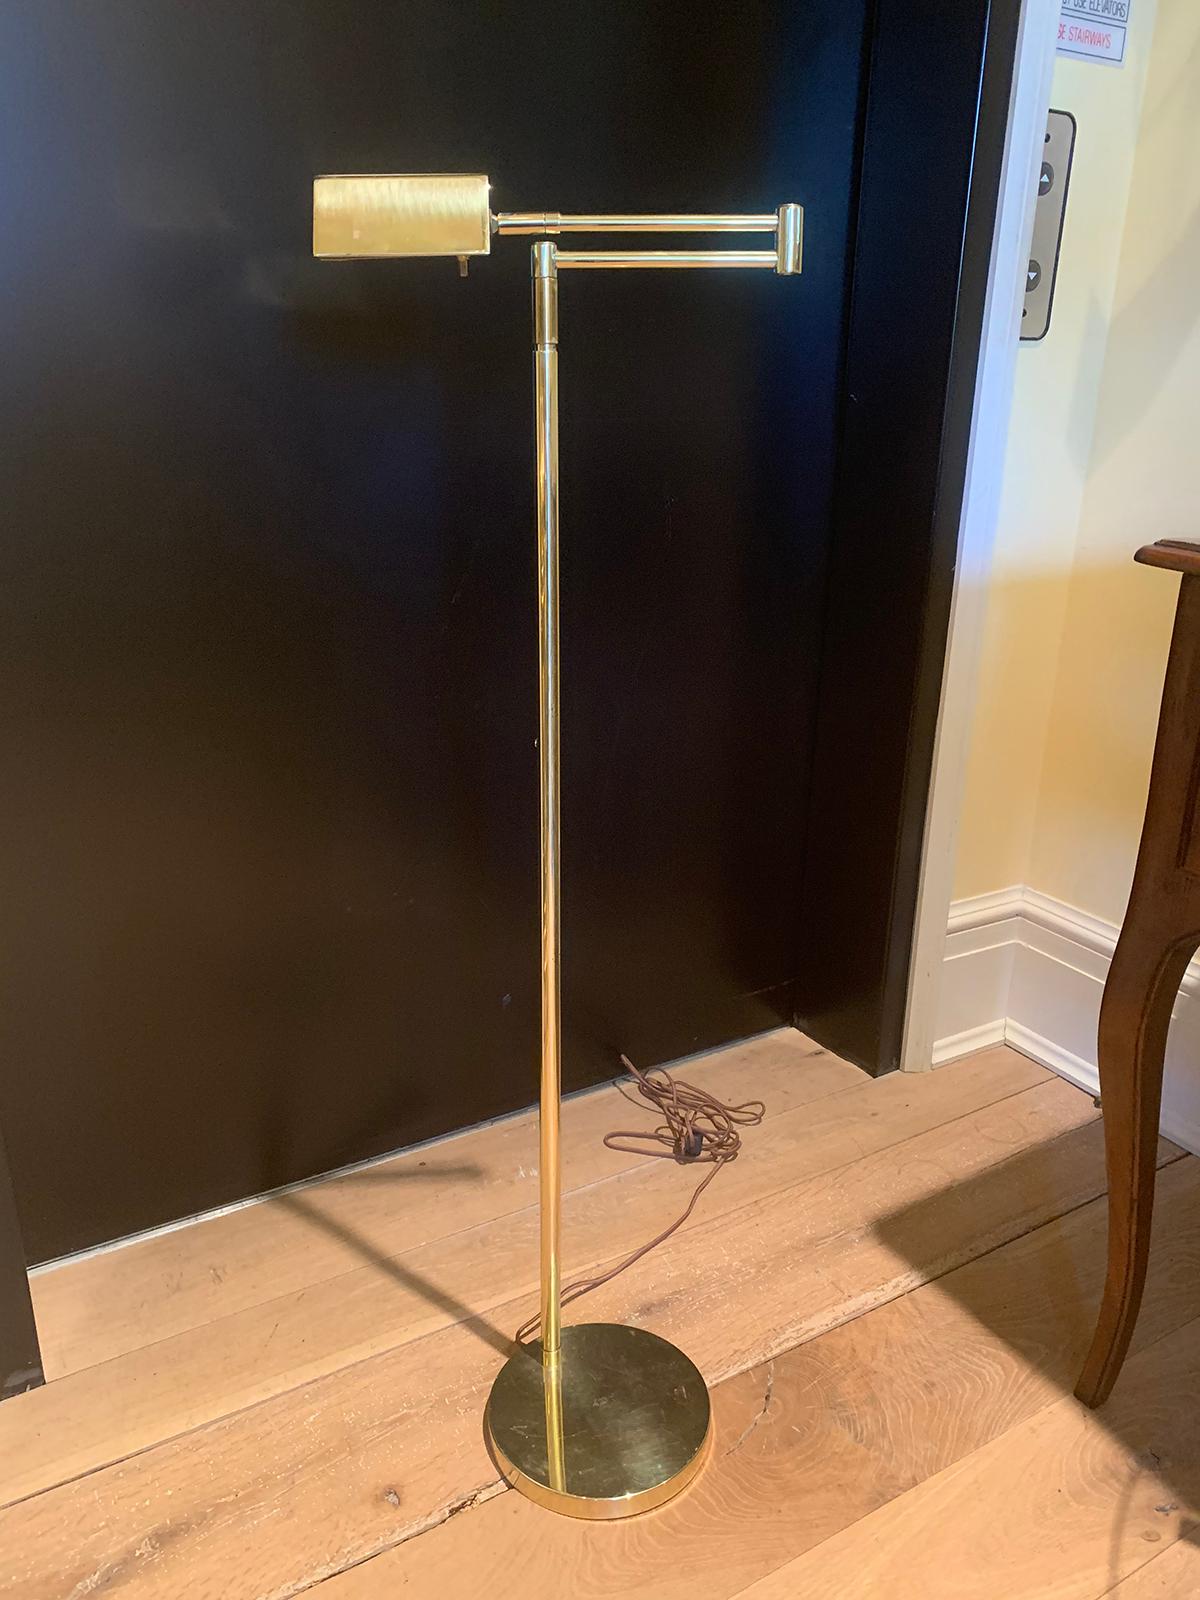 Mid-20th century brass swing arm floor lamp
Measures: 13.5